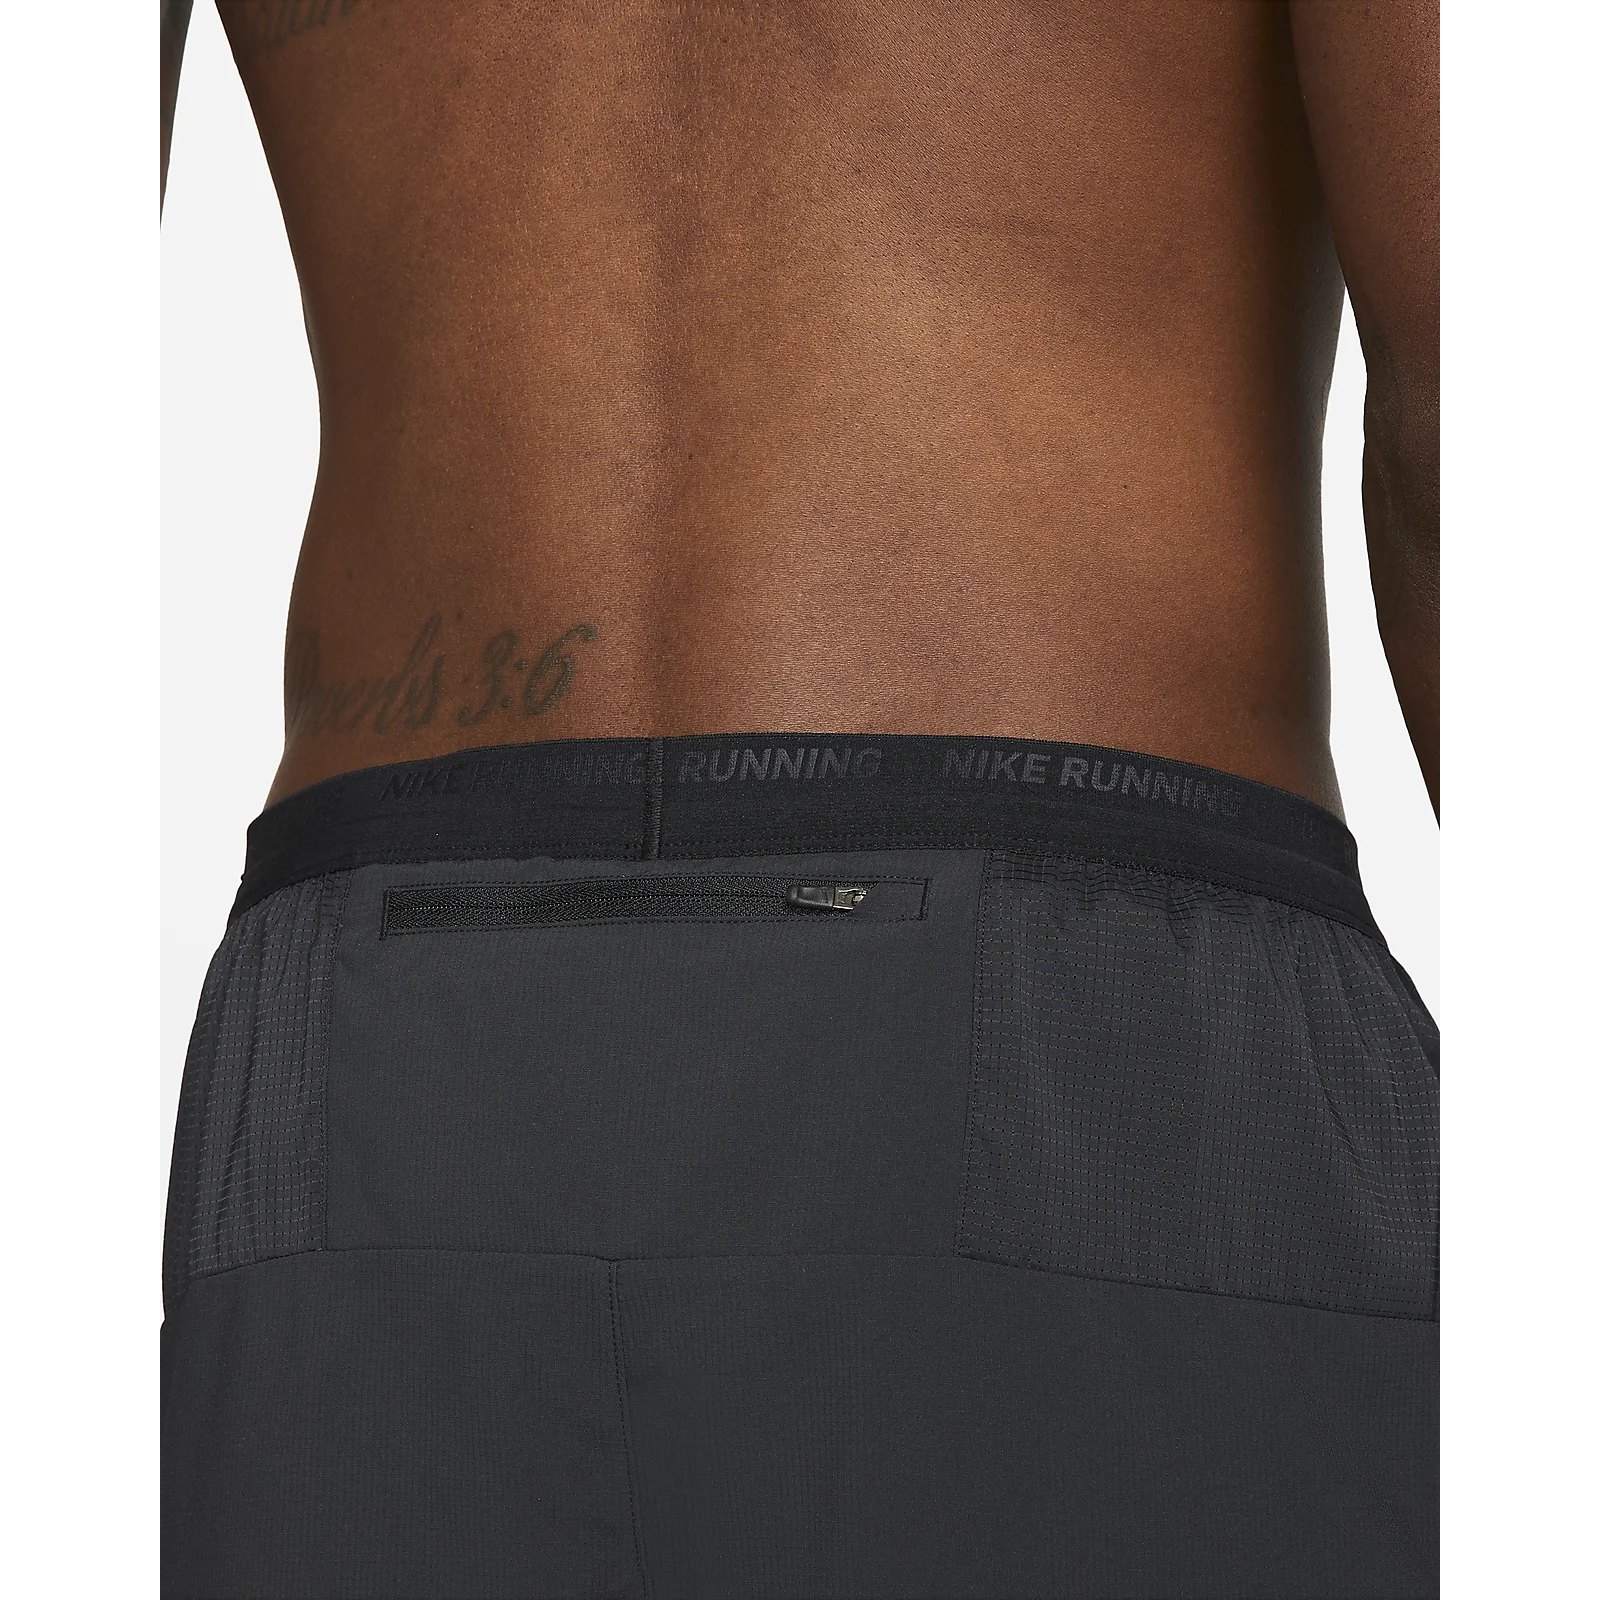 Nike Dri-FIT Stride 5 Brief-Lined Running Shorts Men - black